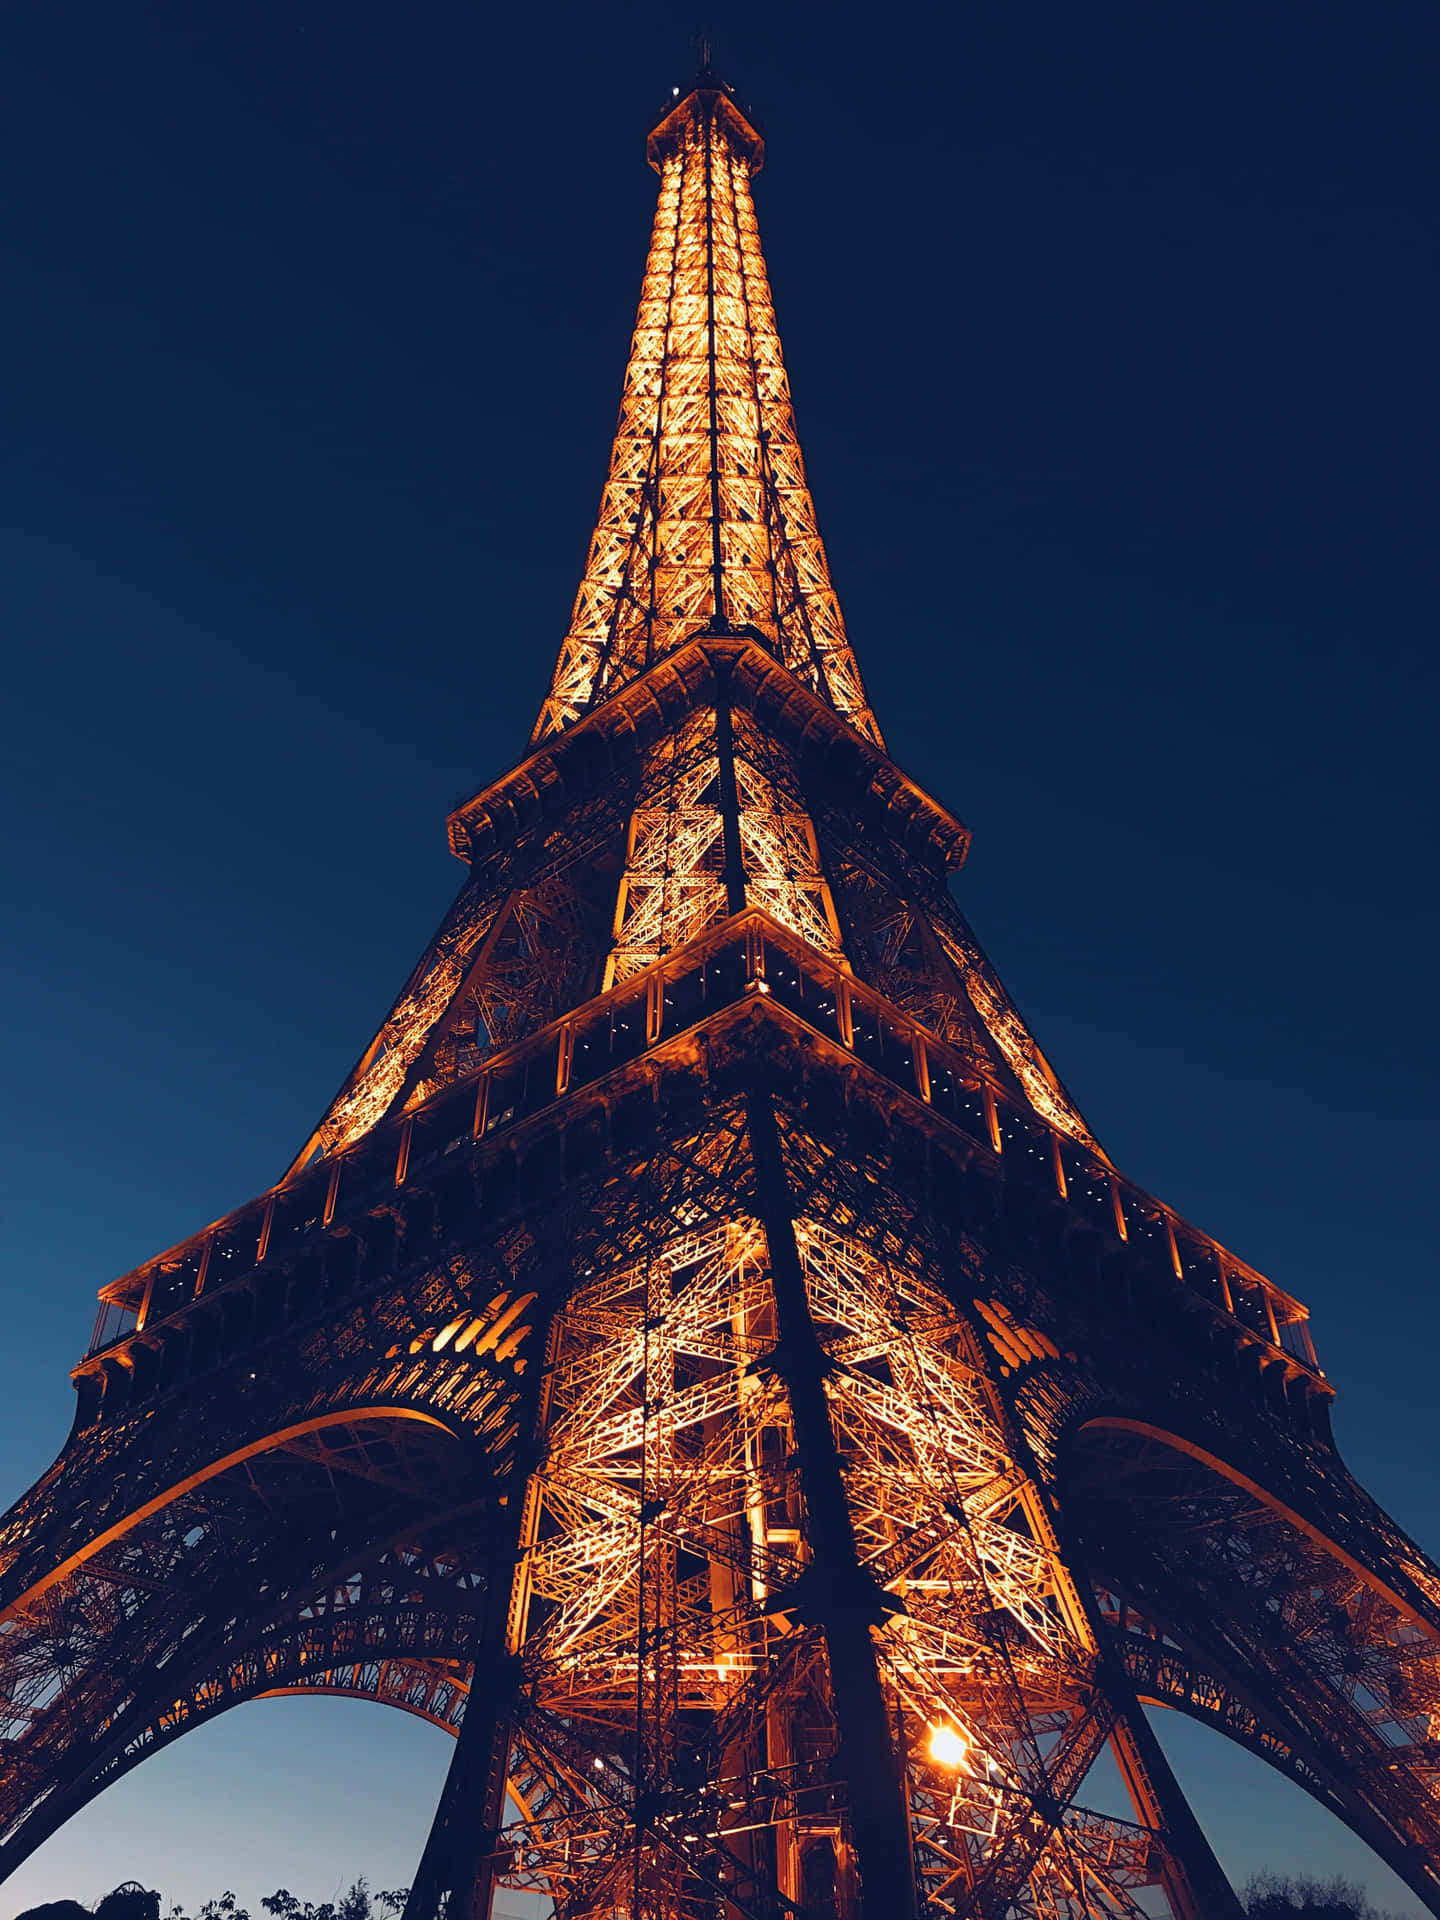 The breathtaking Eiffel Tower in Paris